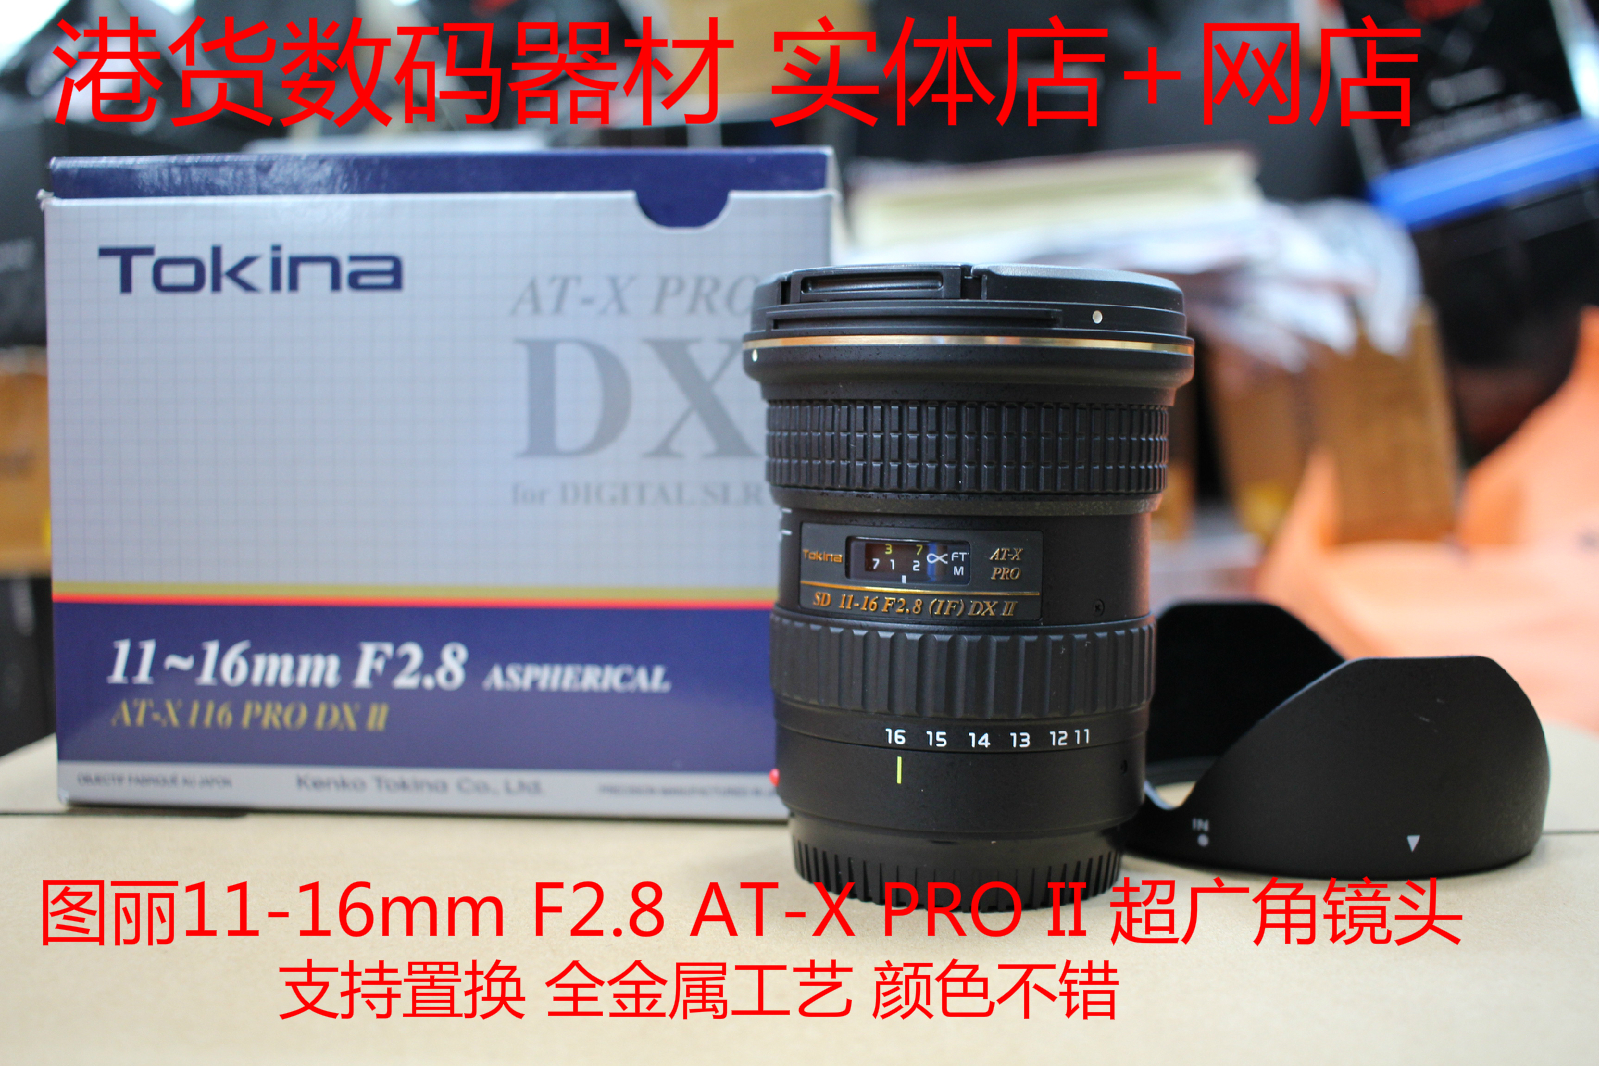 Tokina 11-16/F2.8 II 14-20 12-28 99 新品超広角レンズを完全パッケージ化